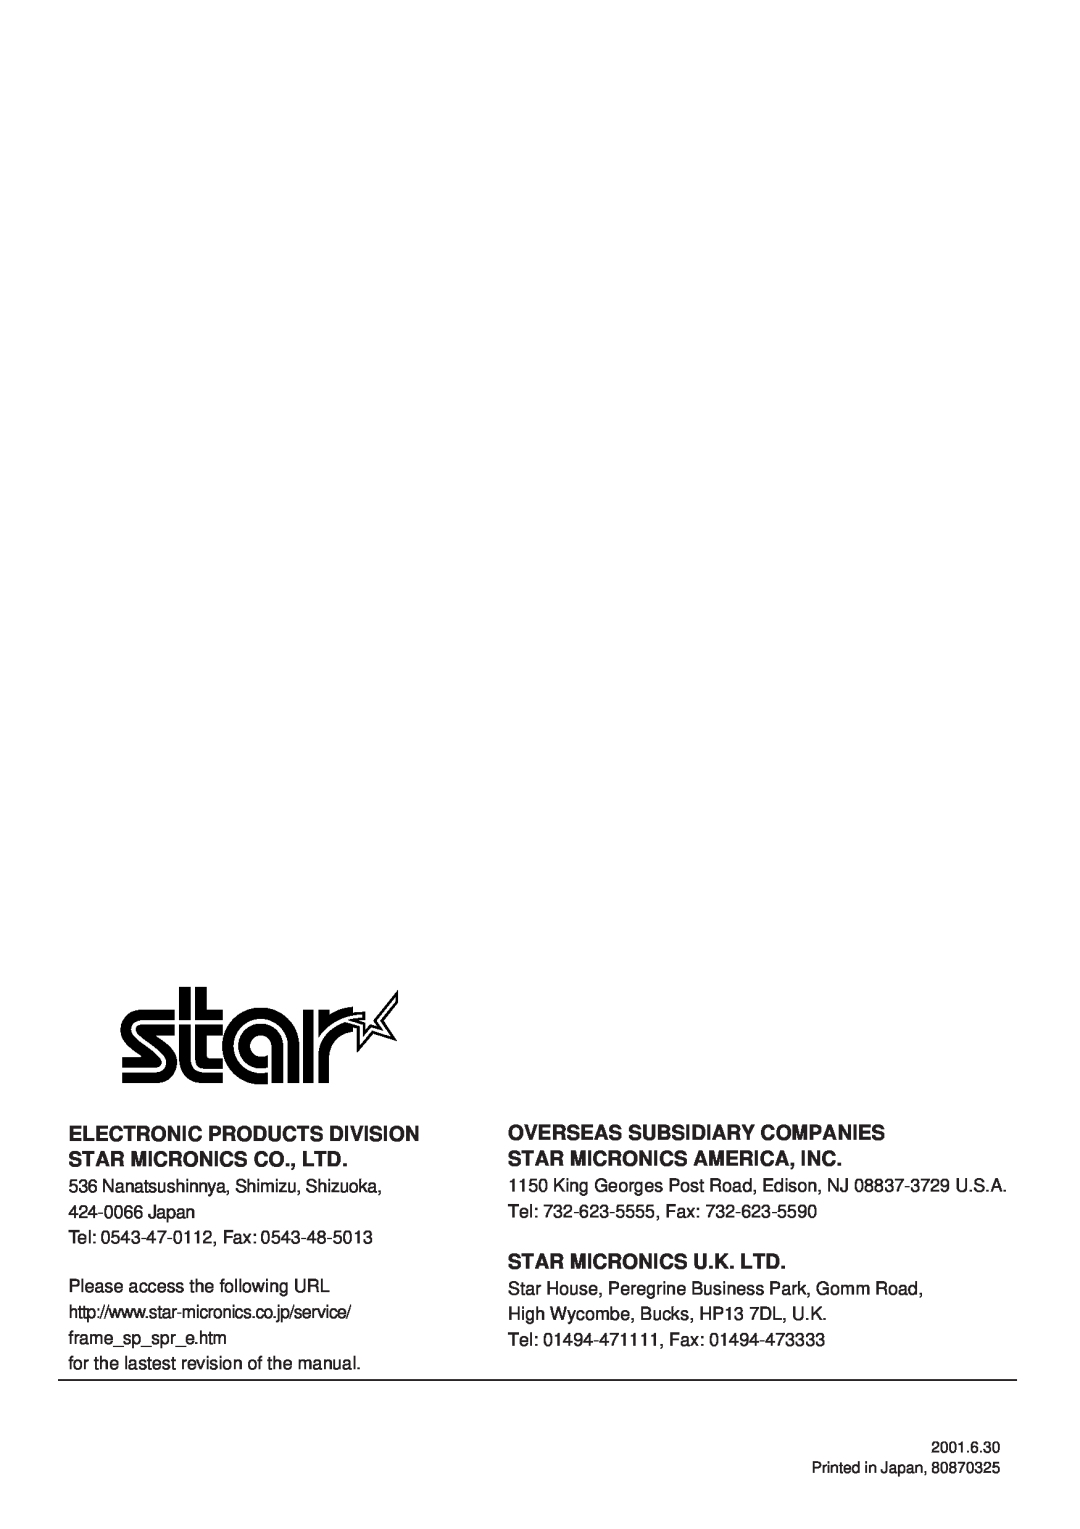 Star Micronics TSP600 Overseas Subsidiary Companies Star Micronics America, Inc, Tel 0543-47-0112, Fax, Printed in Japan 